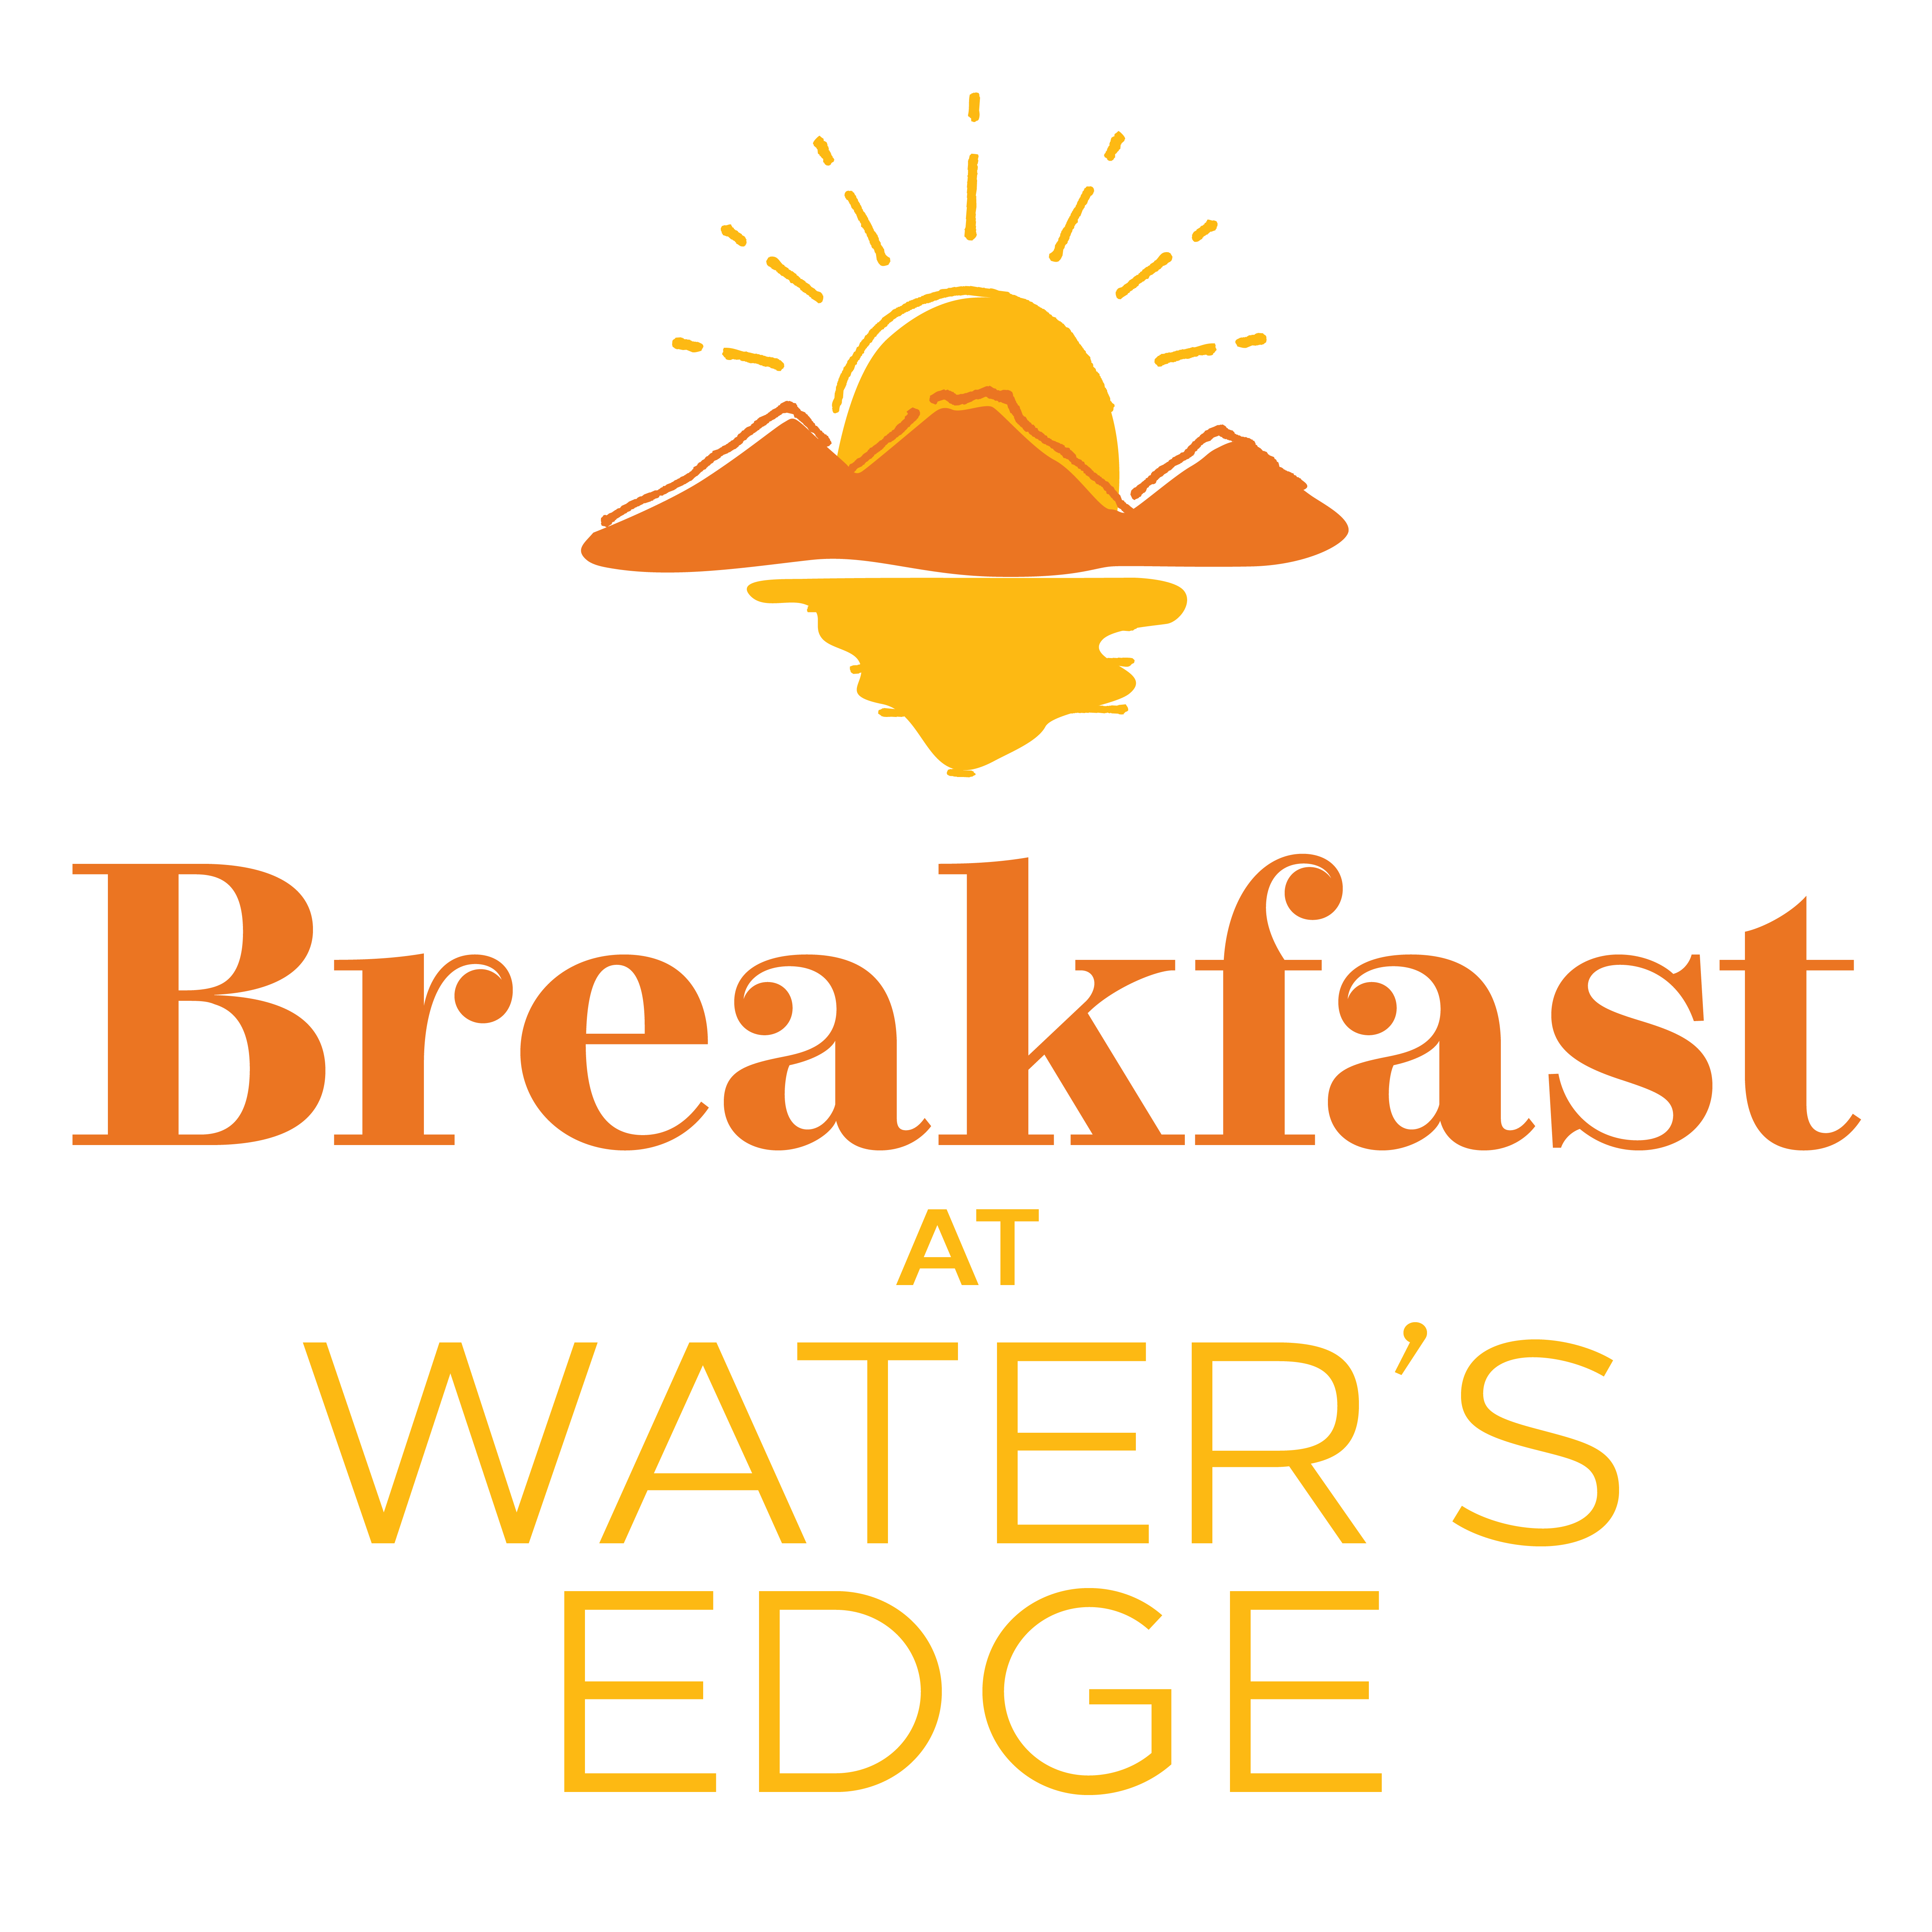 Breakfast Buffet at Water's Edge